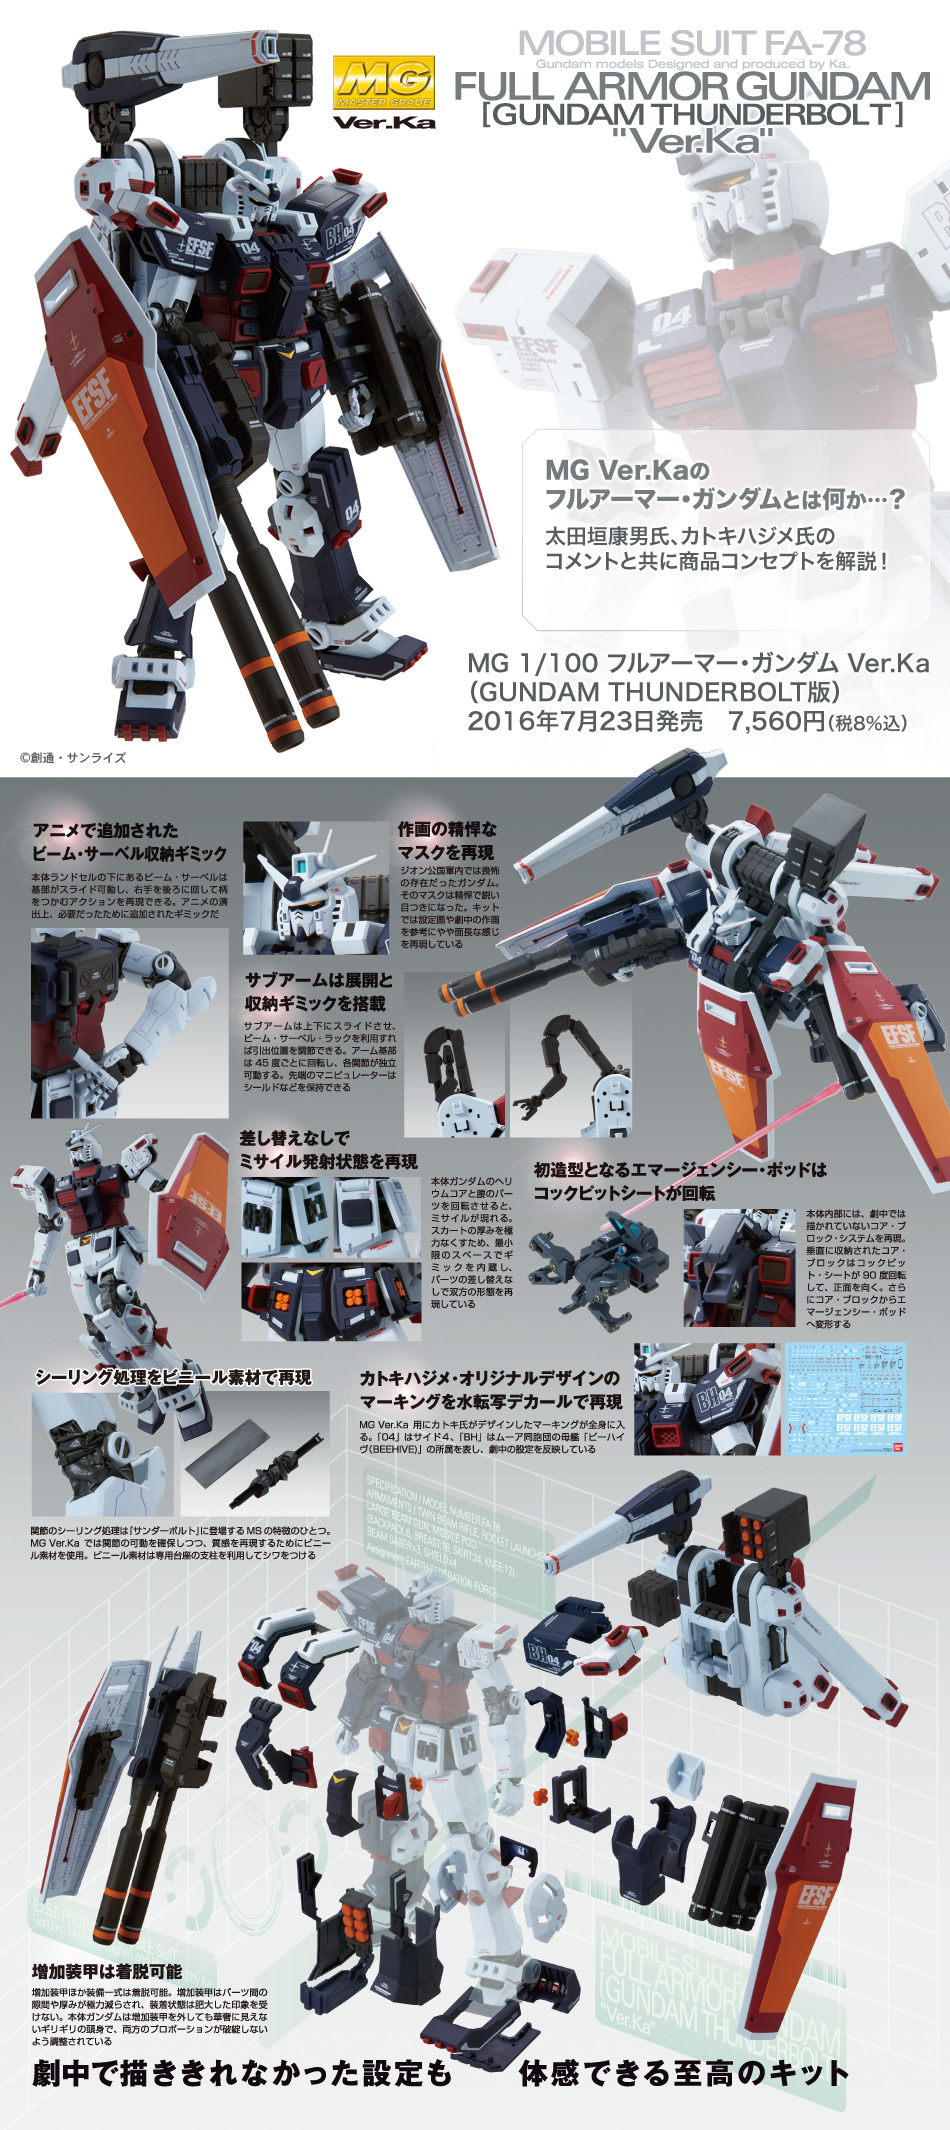 Mg 1 100 フルアーマー ガンダム Ver Ka Gundam Thunderbolt版 バンダイ ホビーサイト